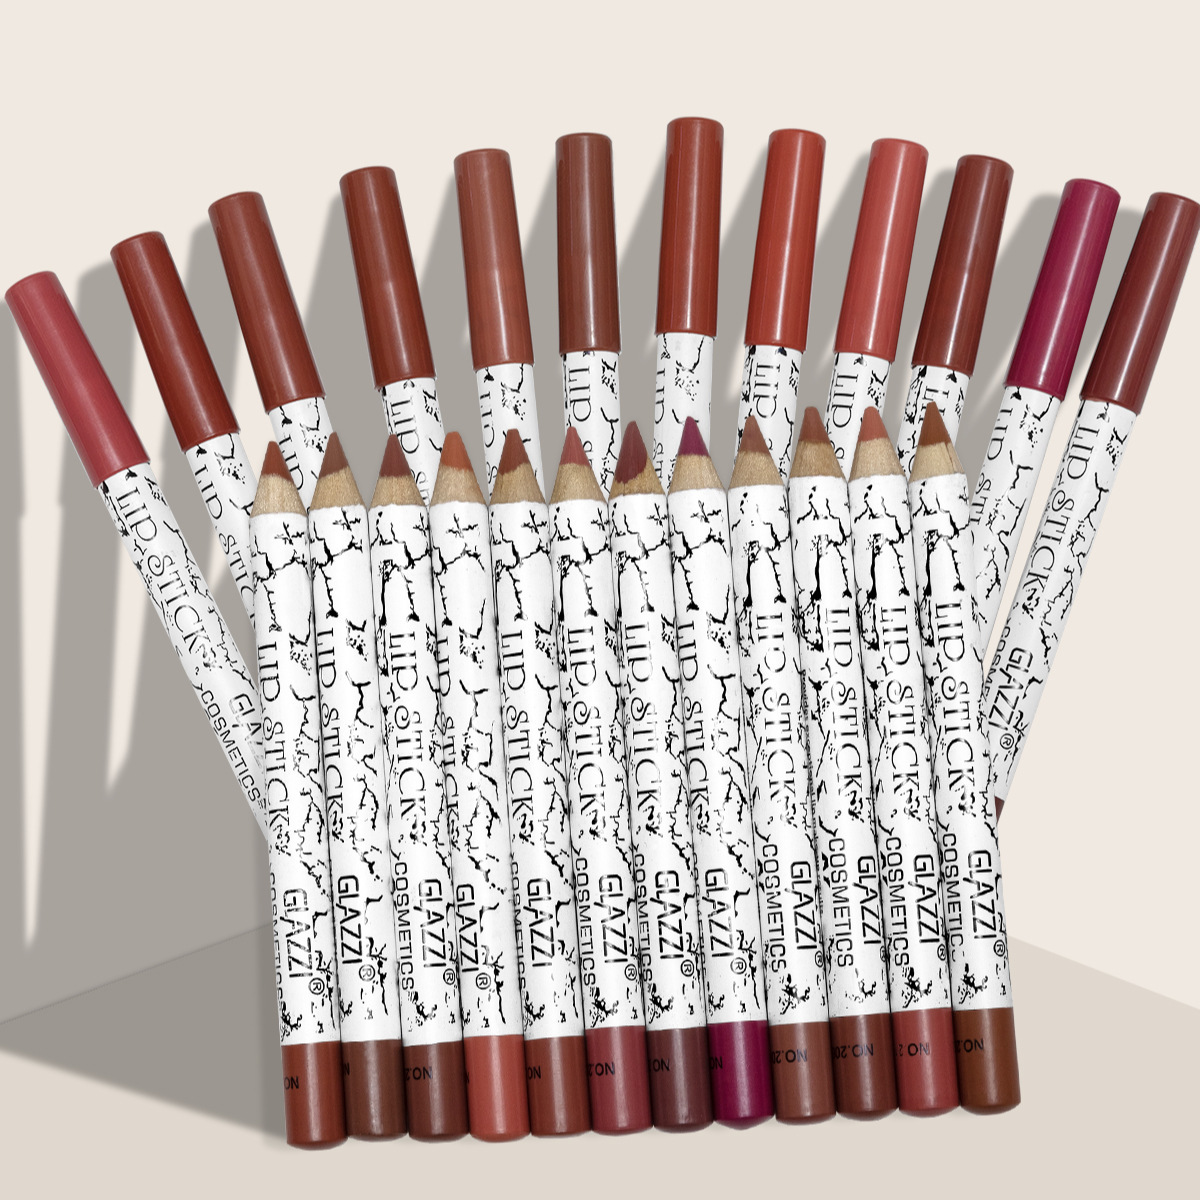 Glazzi Lipstick Pen + Lip Liner Combination Set Matte Finish Lipstick Pen Lip Pencil 12 Colors